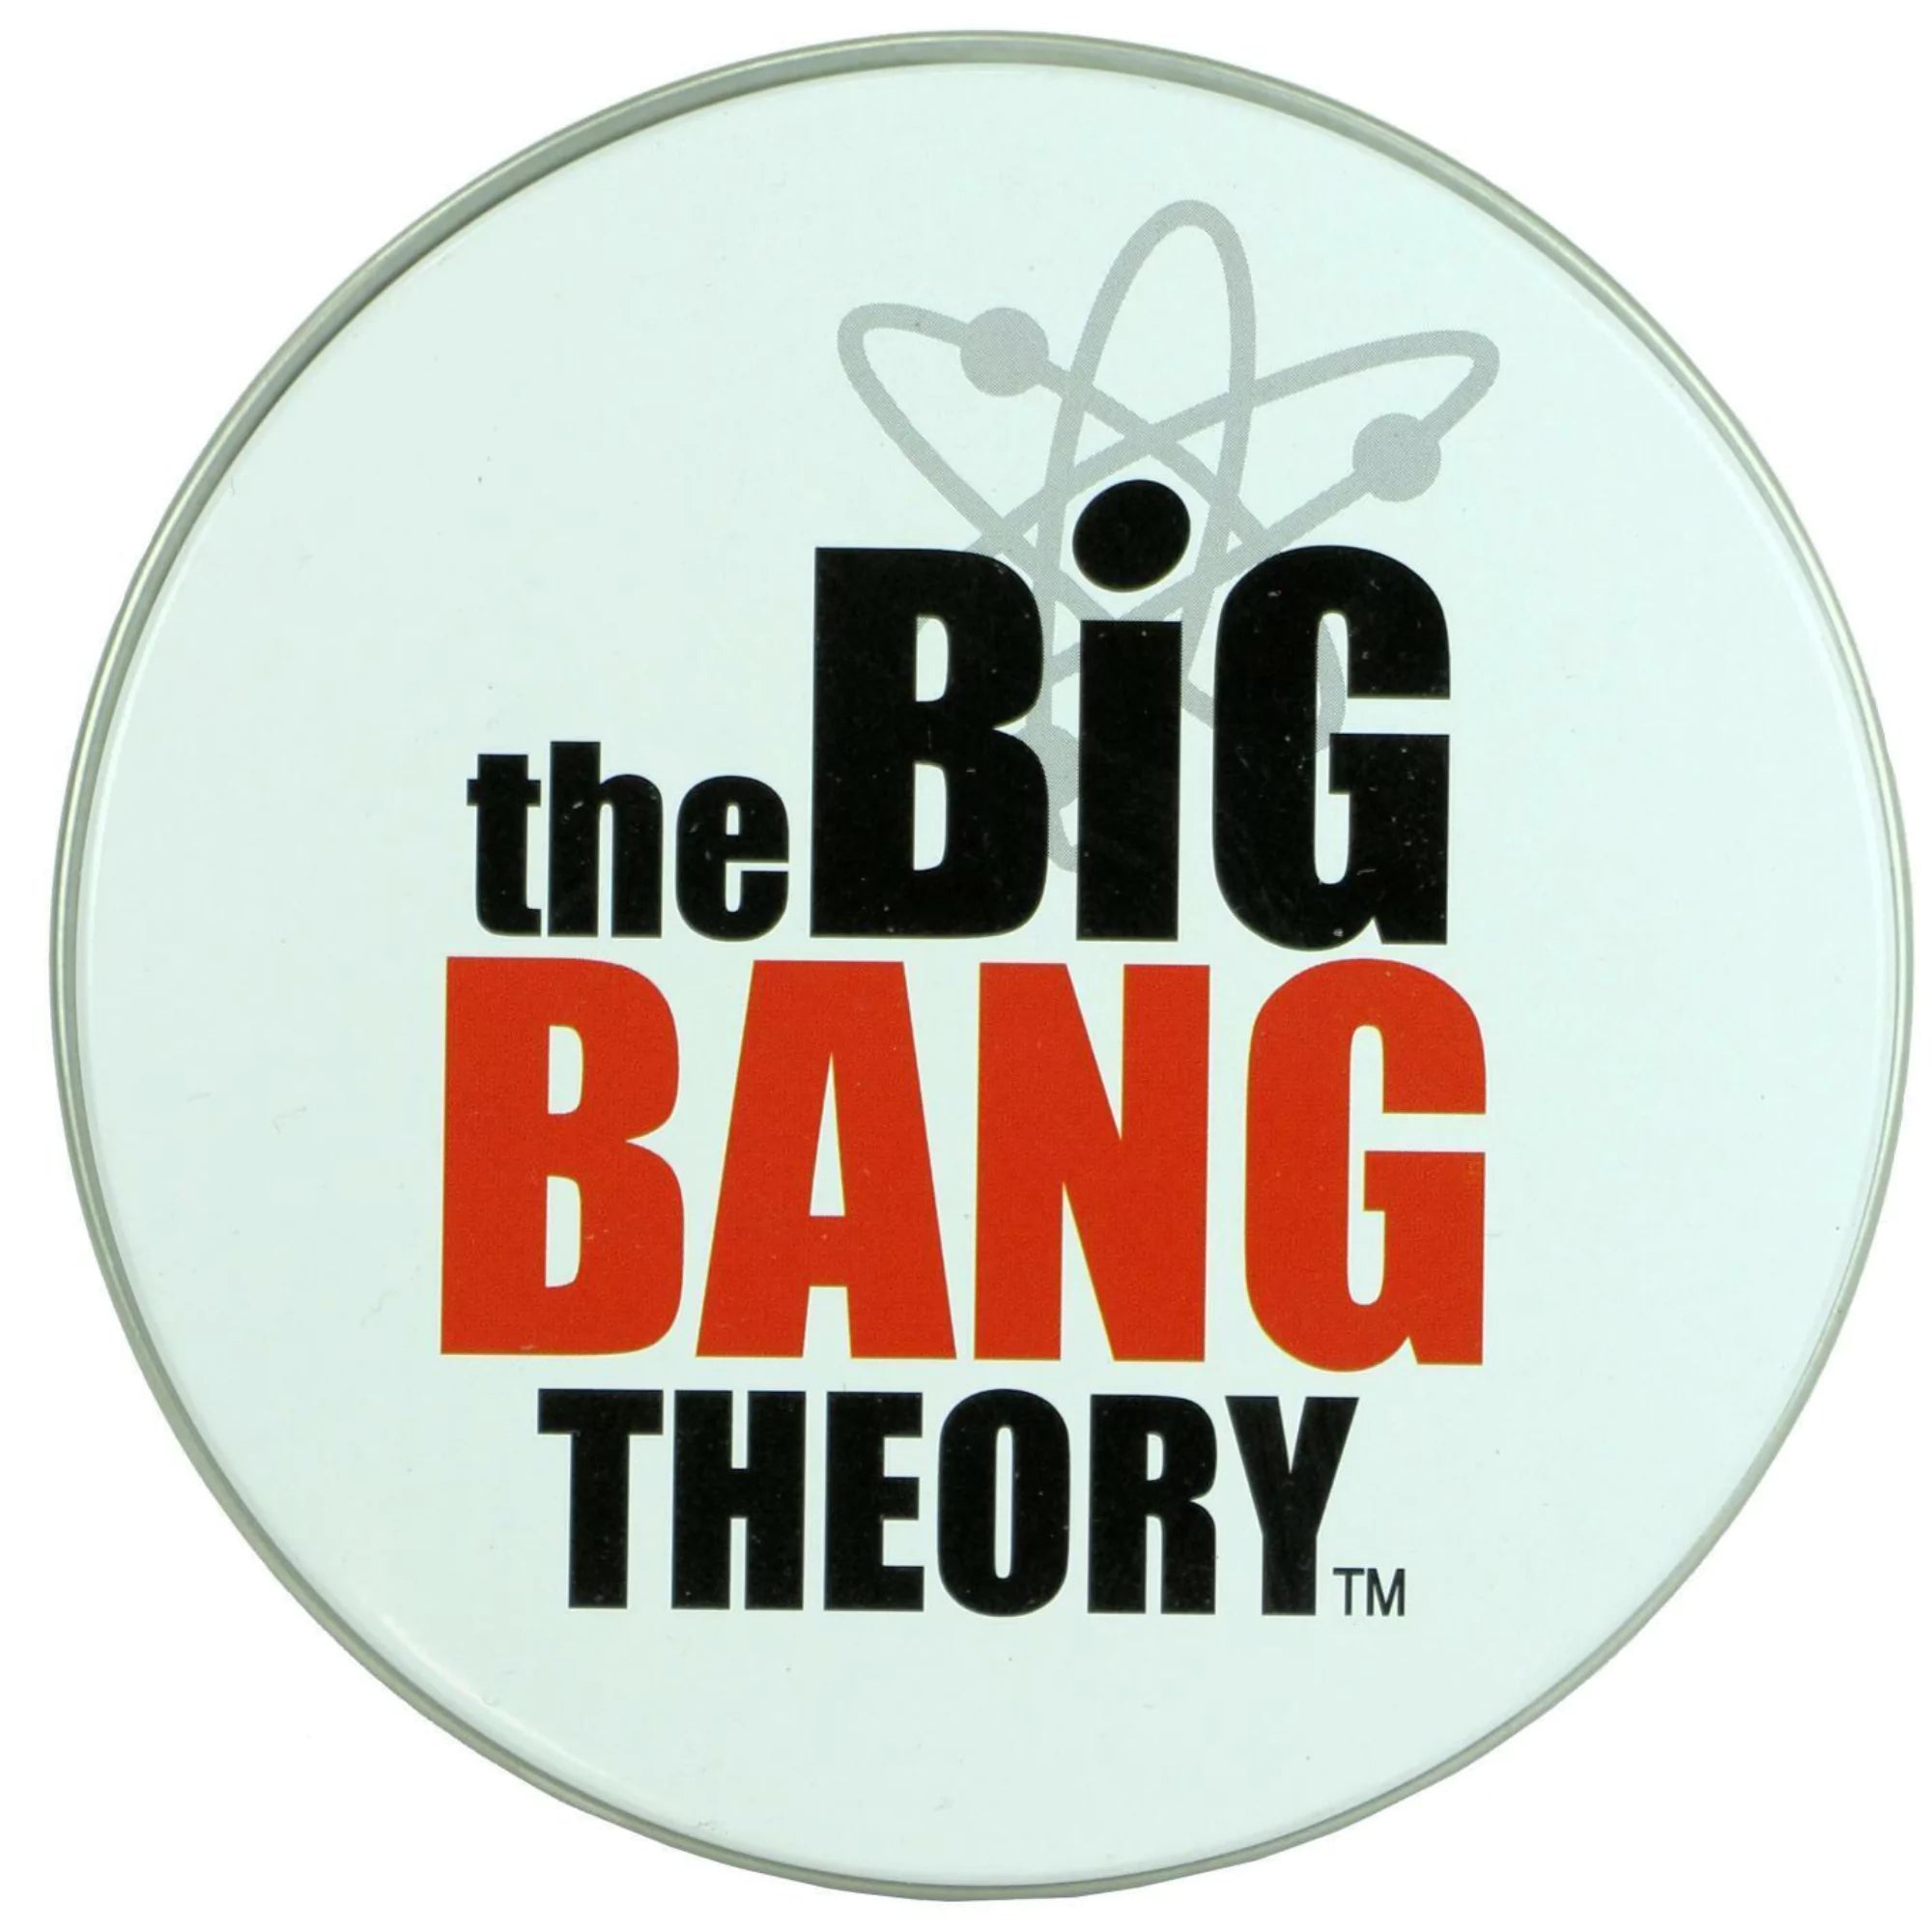 The Big Bang Theory Gift Sets - Money Tin, Metal Coaster 4 Pack & Talking Push Button Bazinga - Set of 3 - Toptoys2u